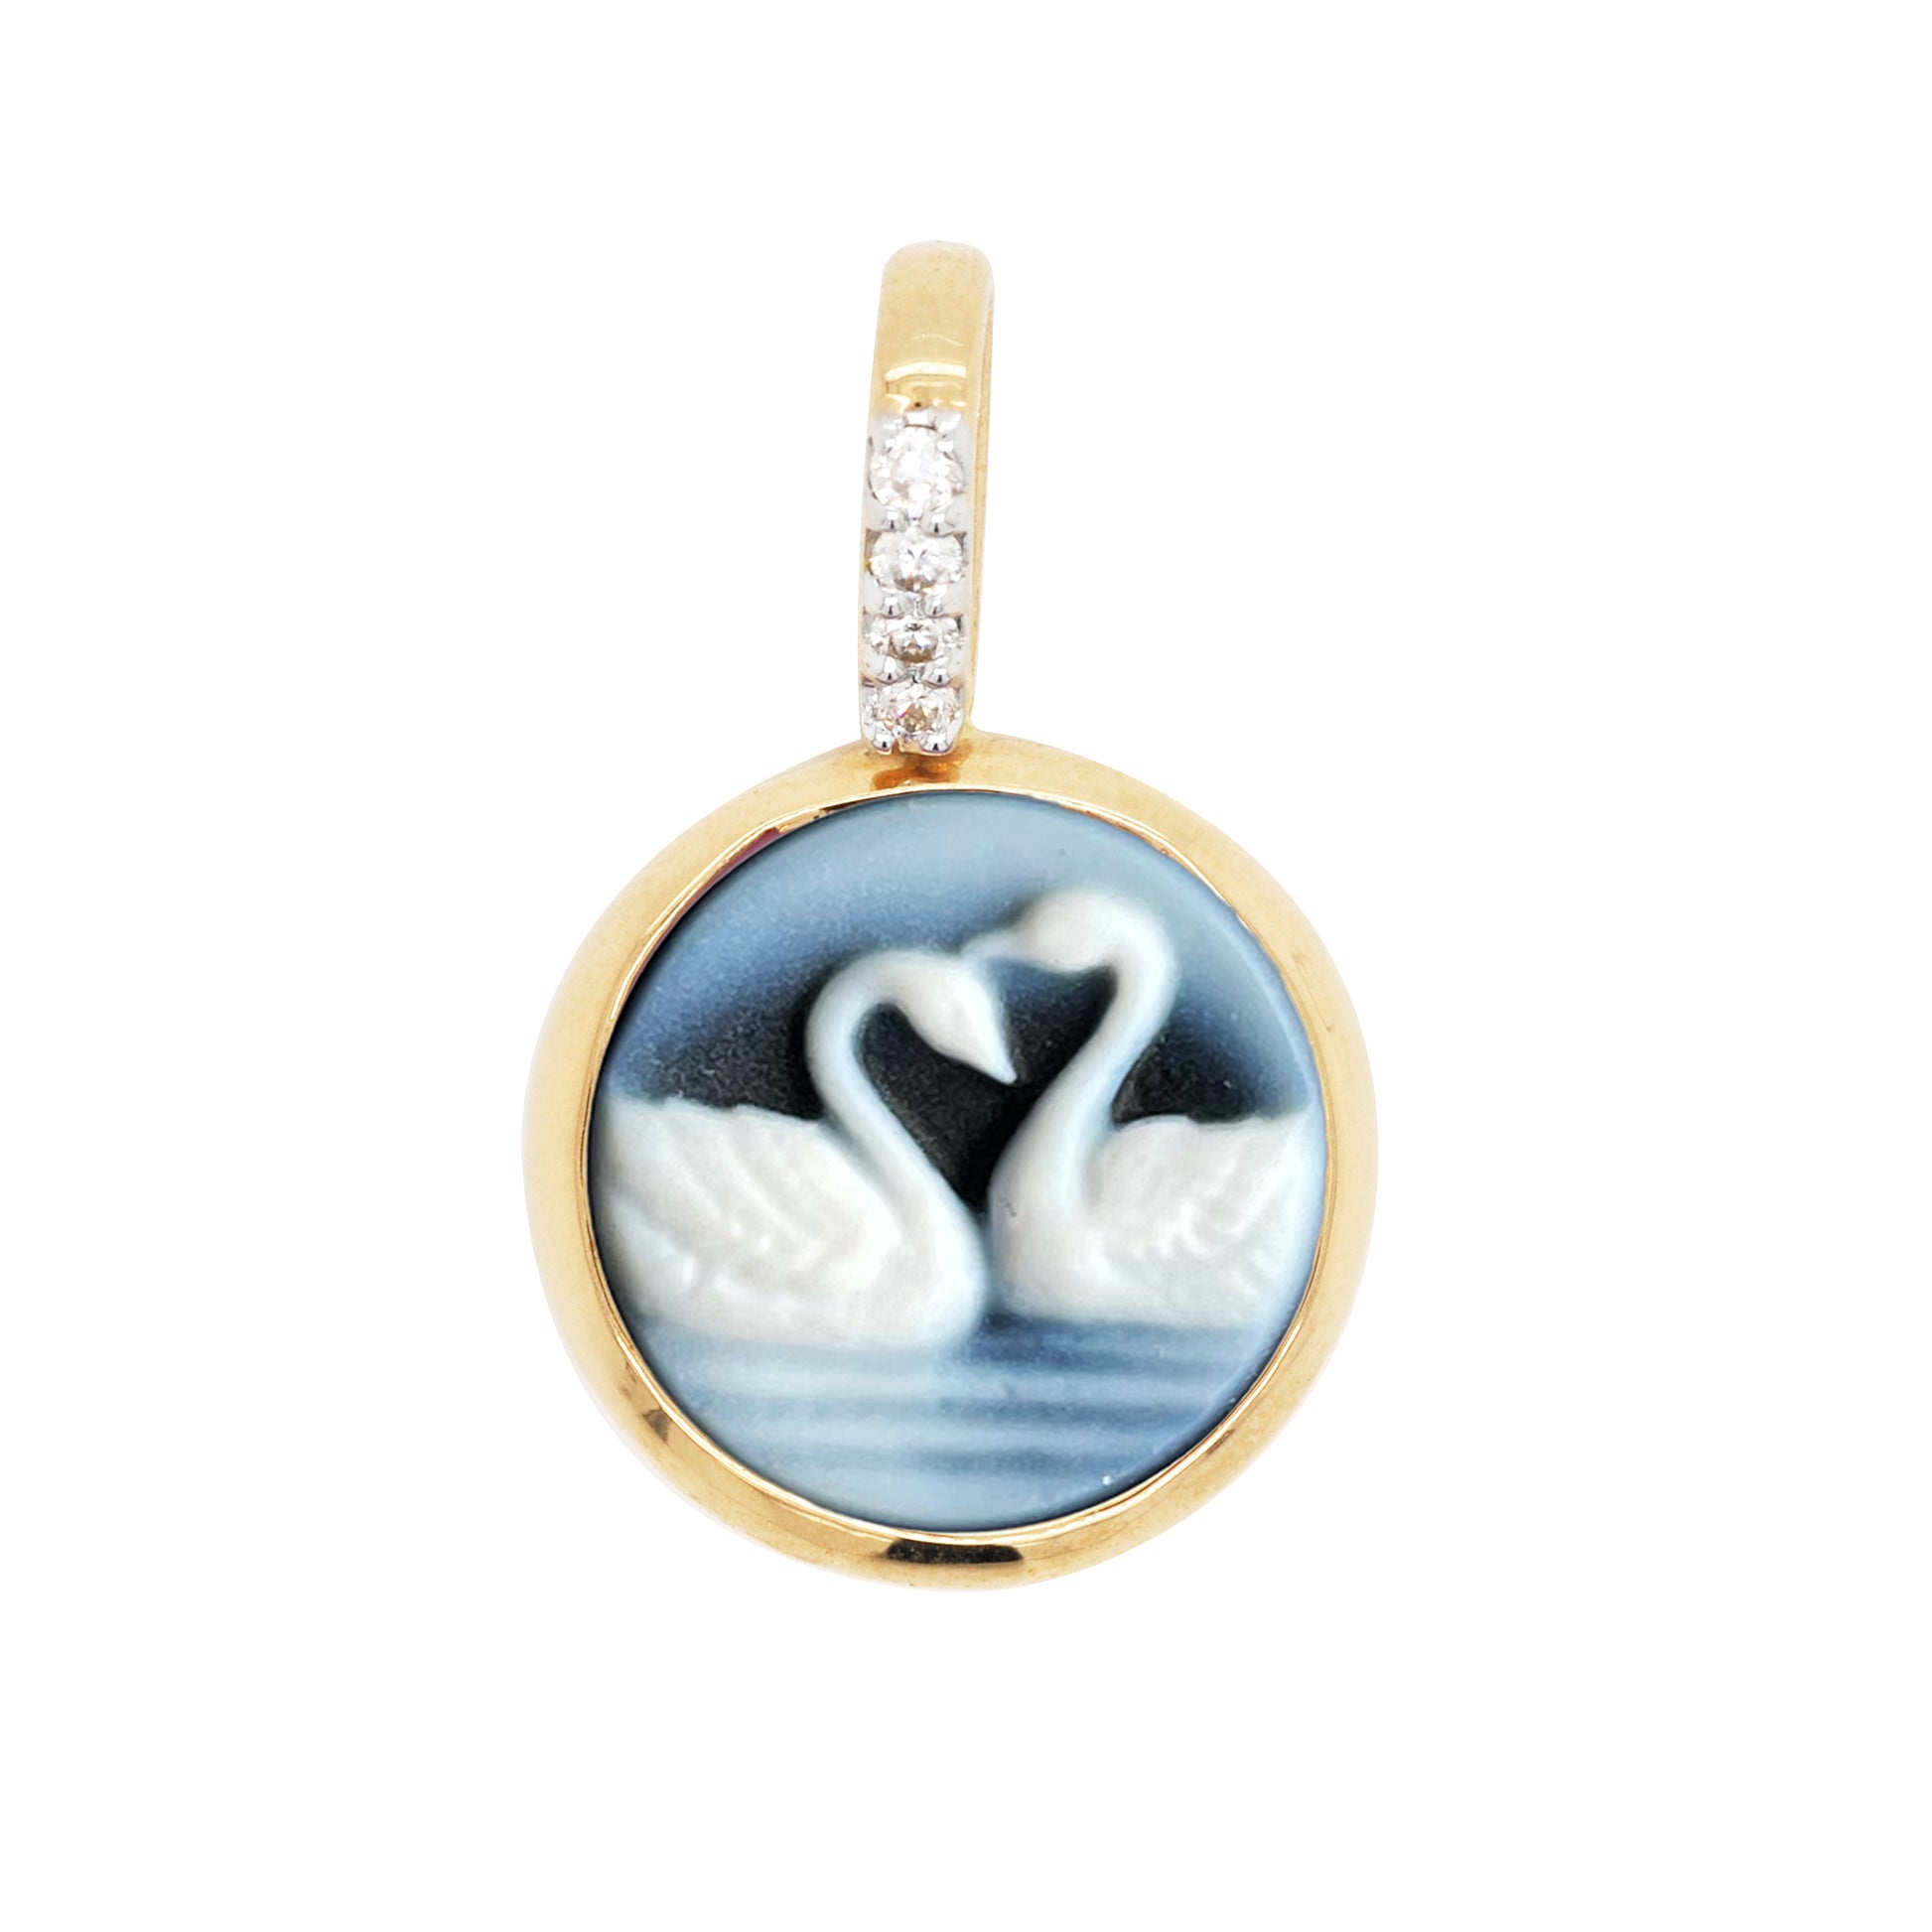 Swan agate pendant